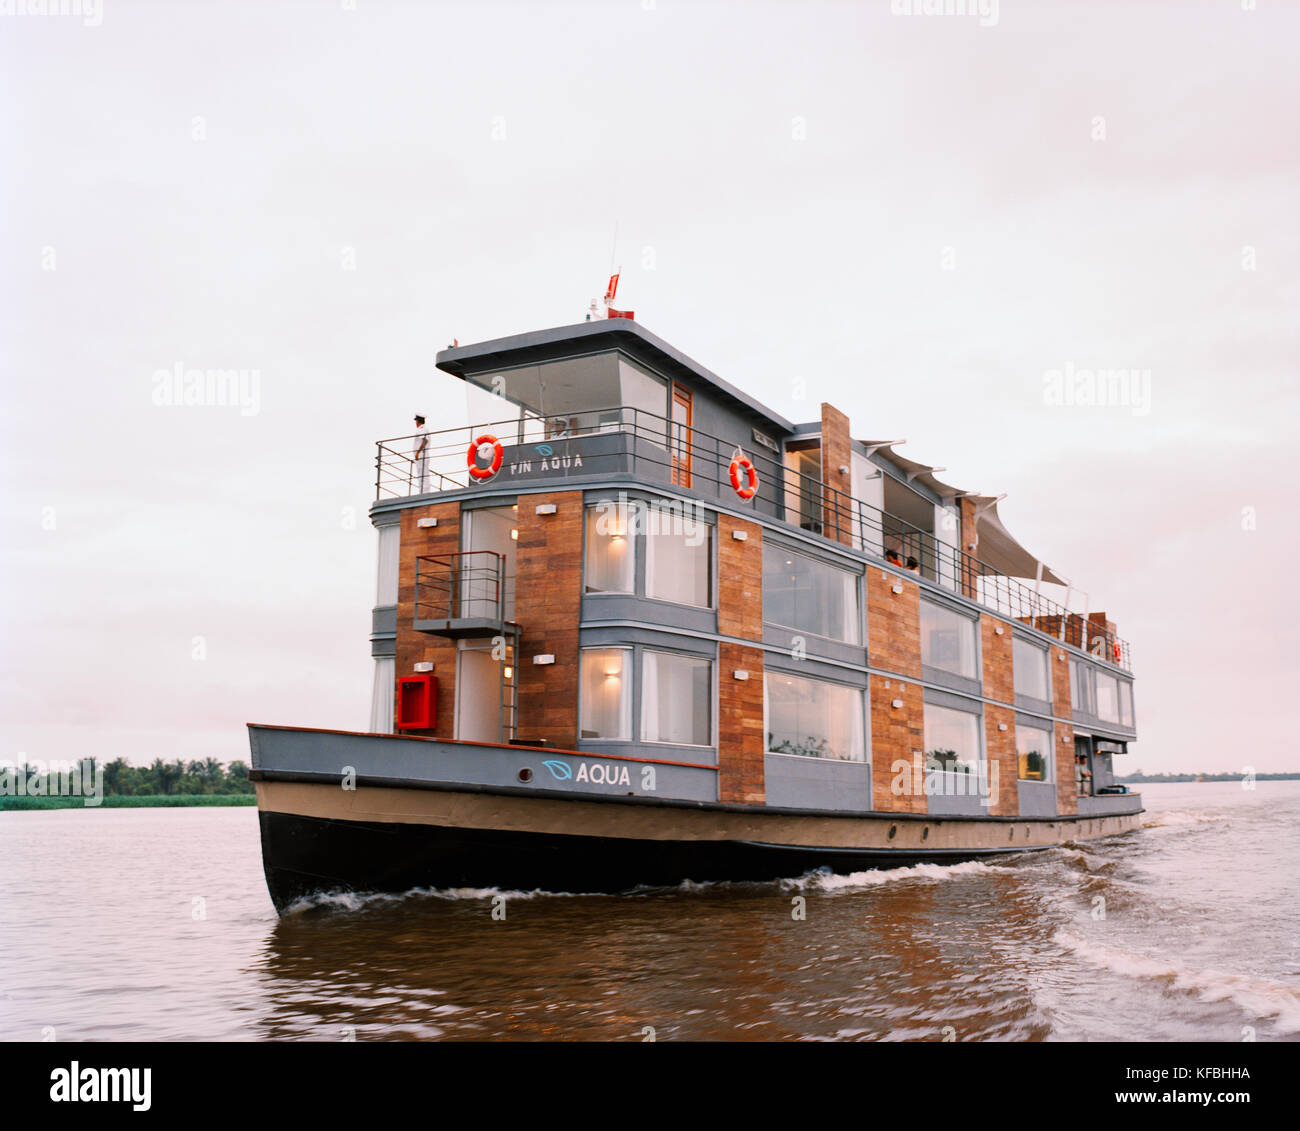 Amazon river cruise -Fotos und -Bildmaterial in hoher Auflösung – Alamy